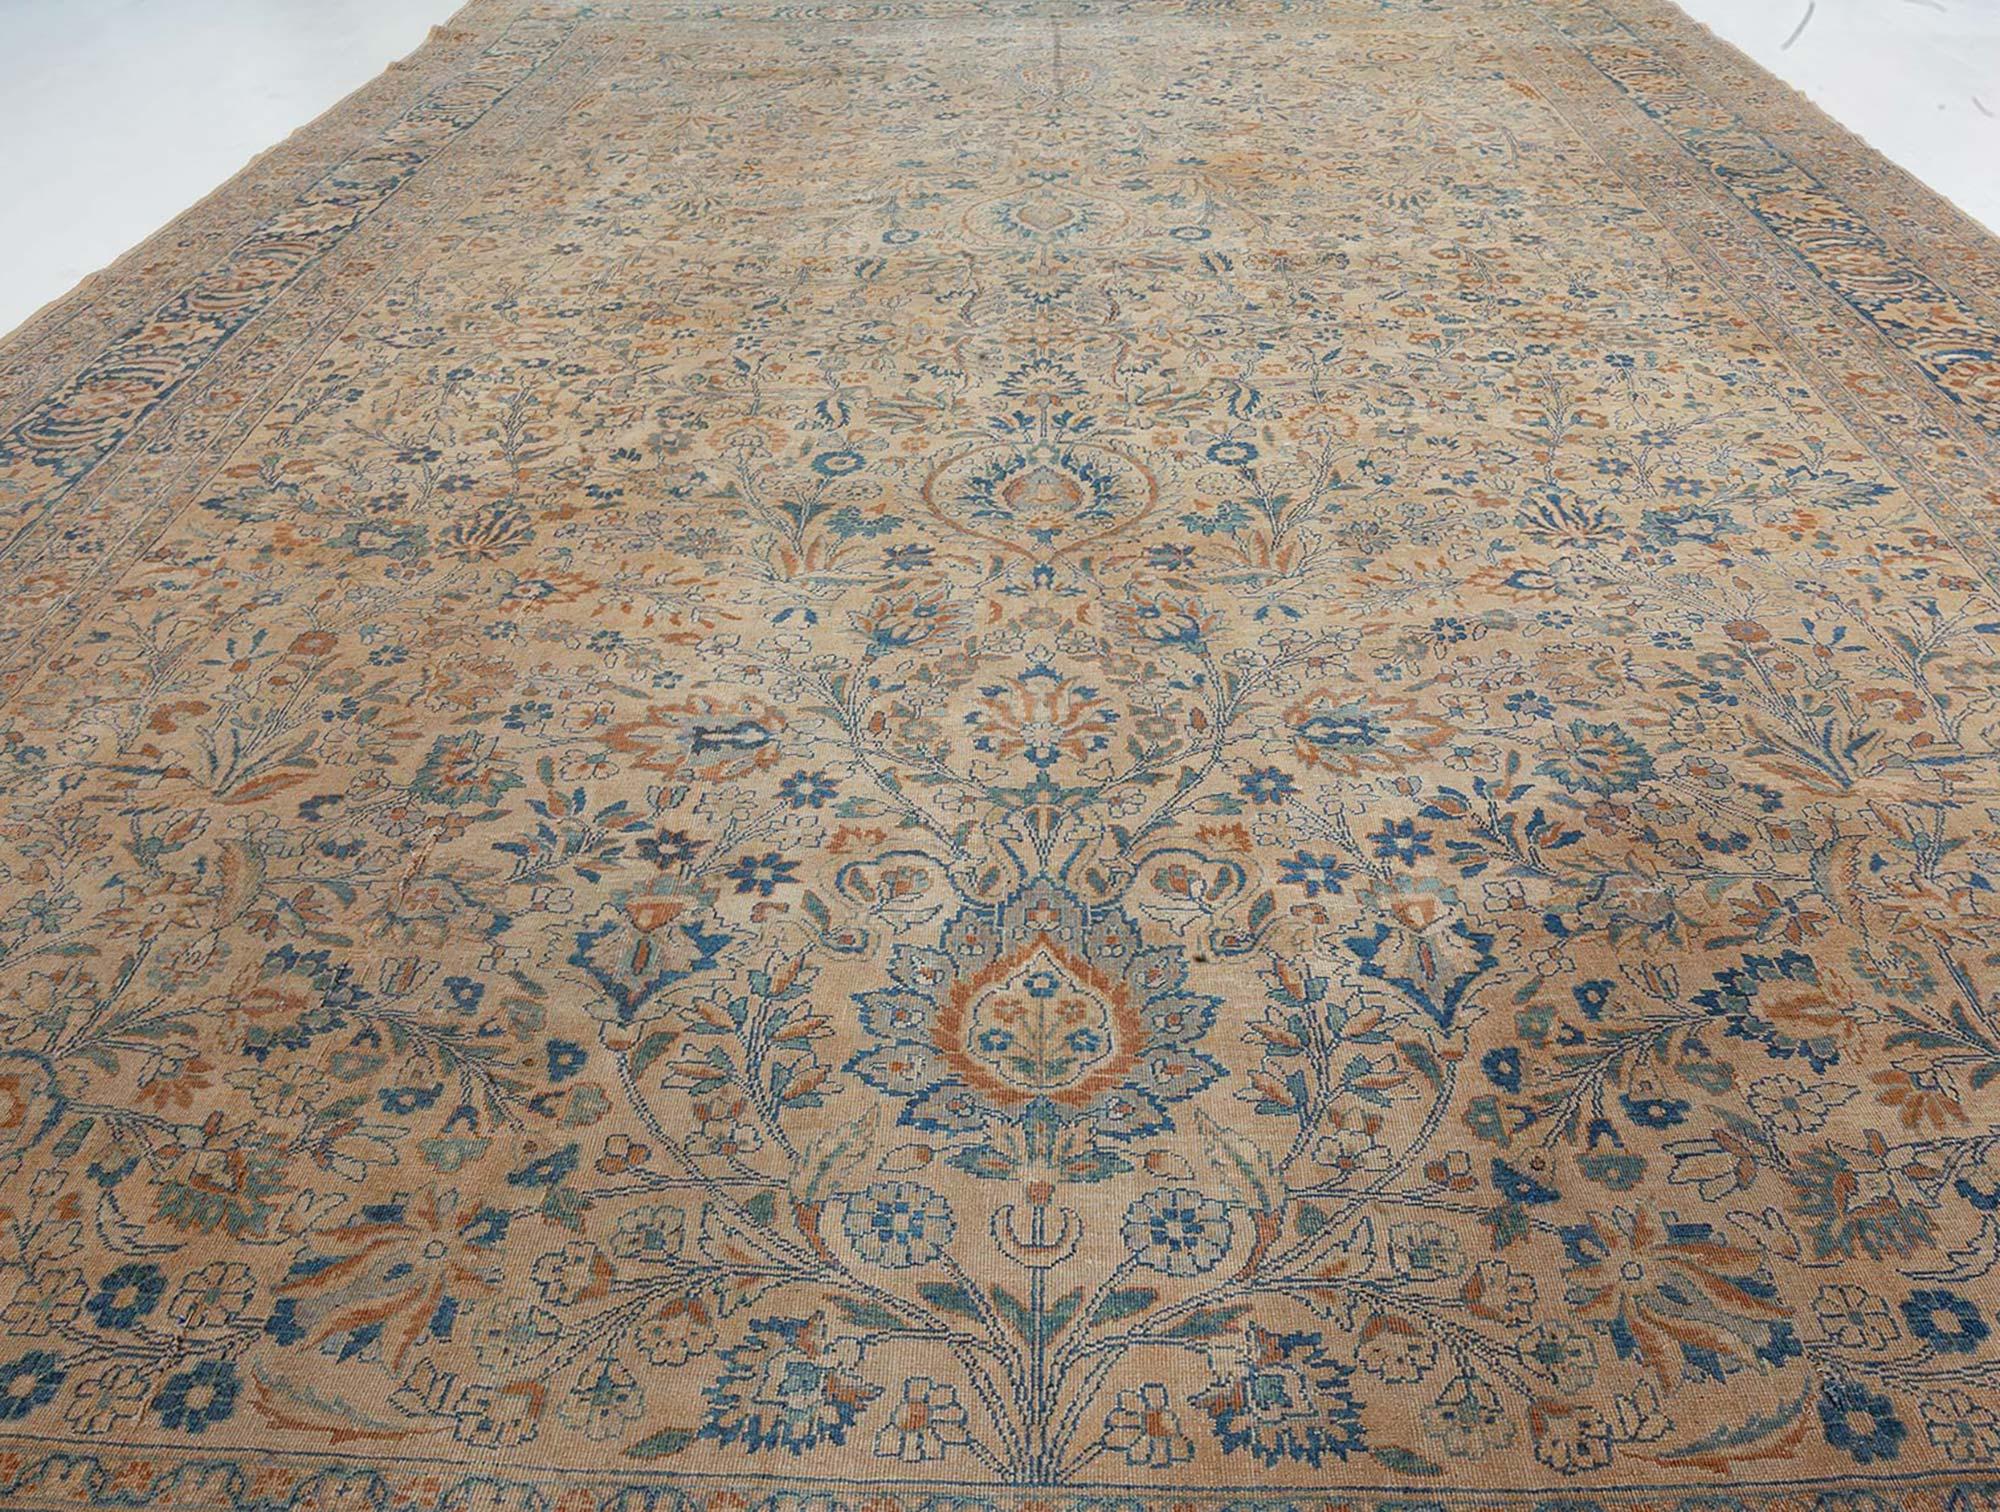 Authentic 1900s Persian Kirman handmade wool rug
Size: 11'9